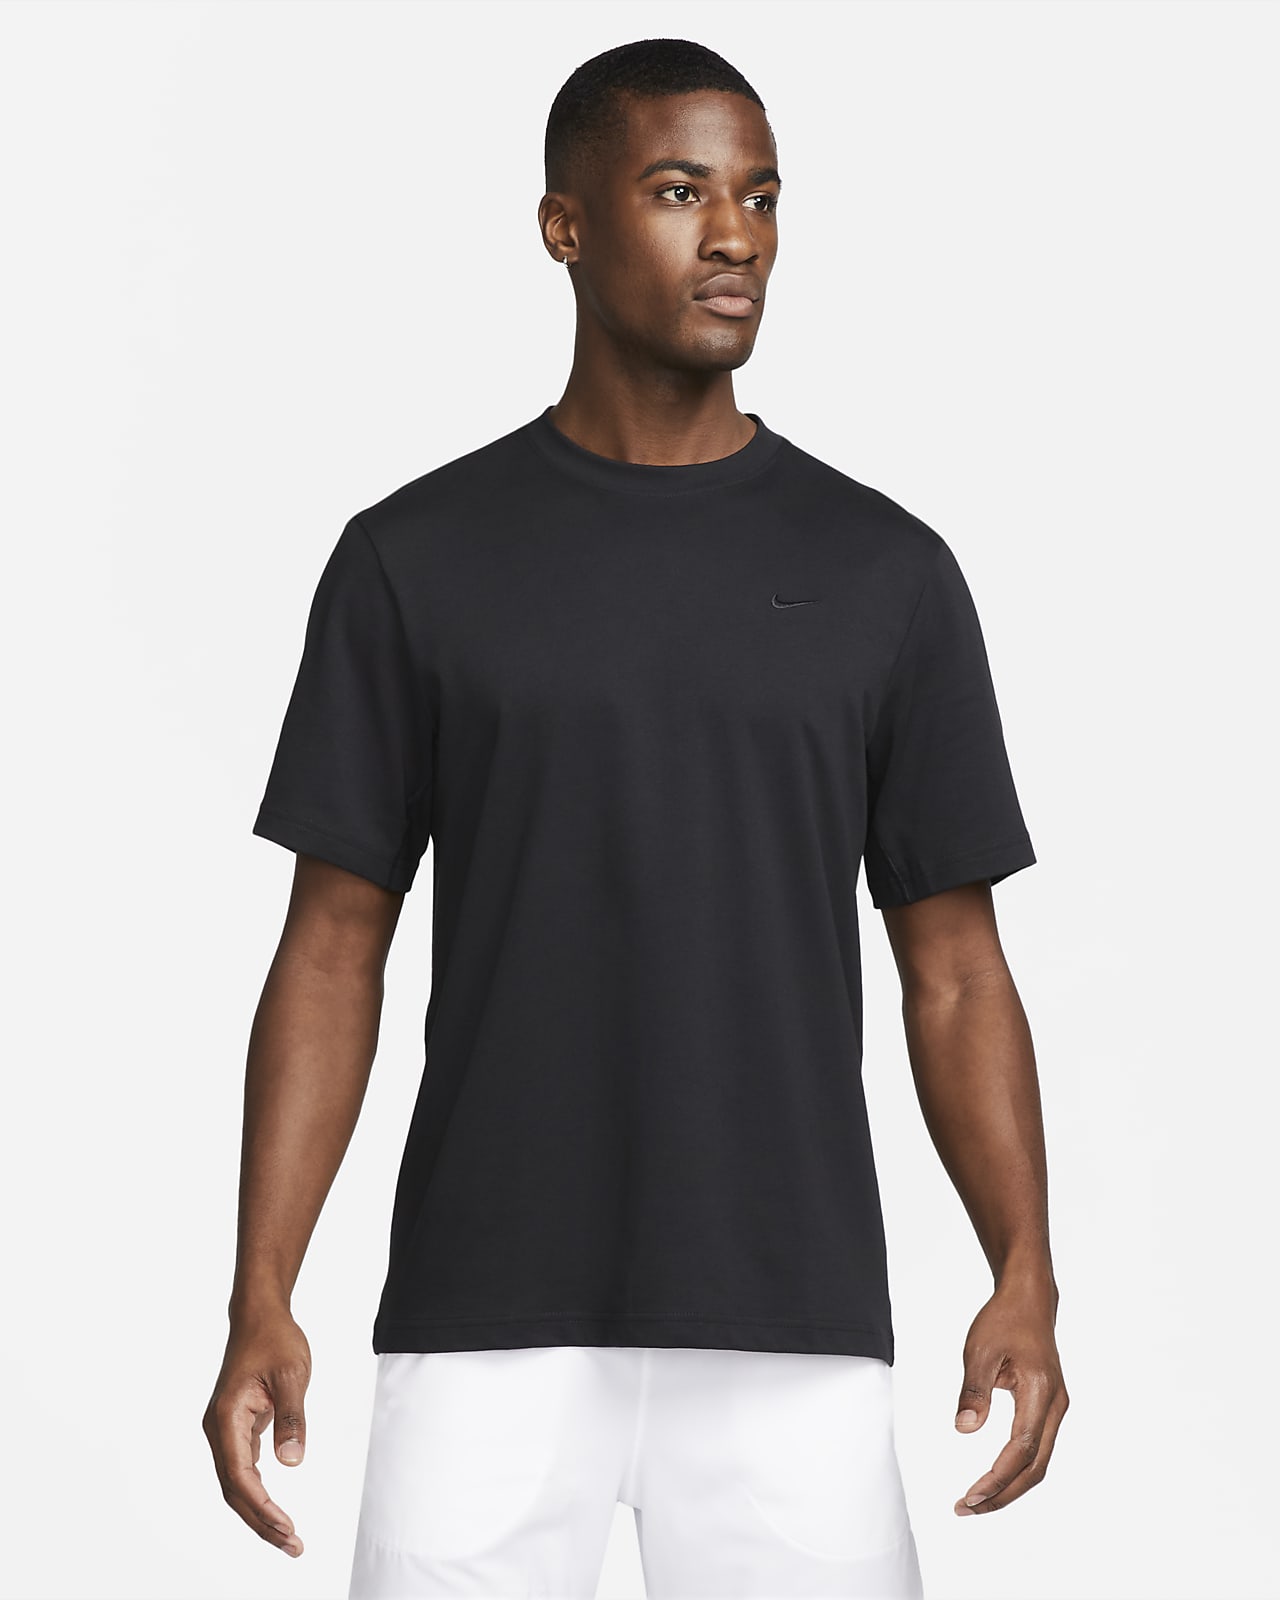 Nike Primary Men's Dri-FIT Short-Sleeve Top. Nike.com